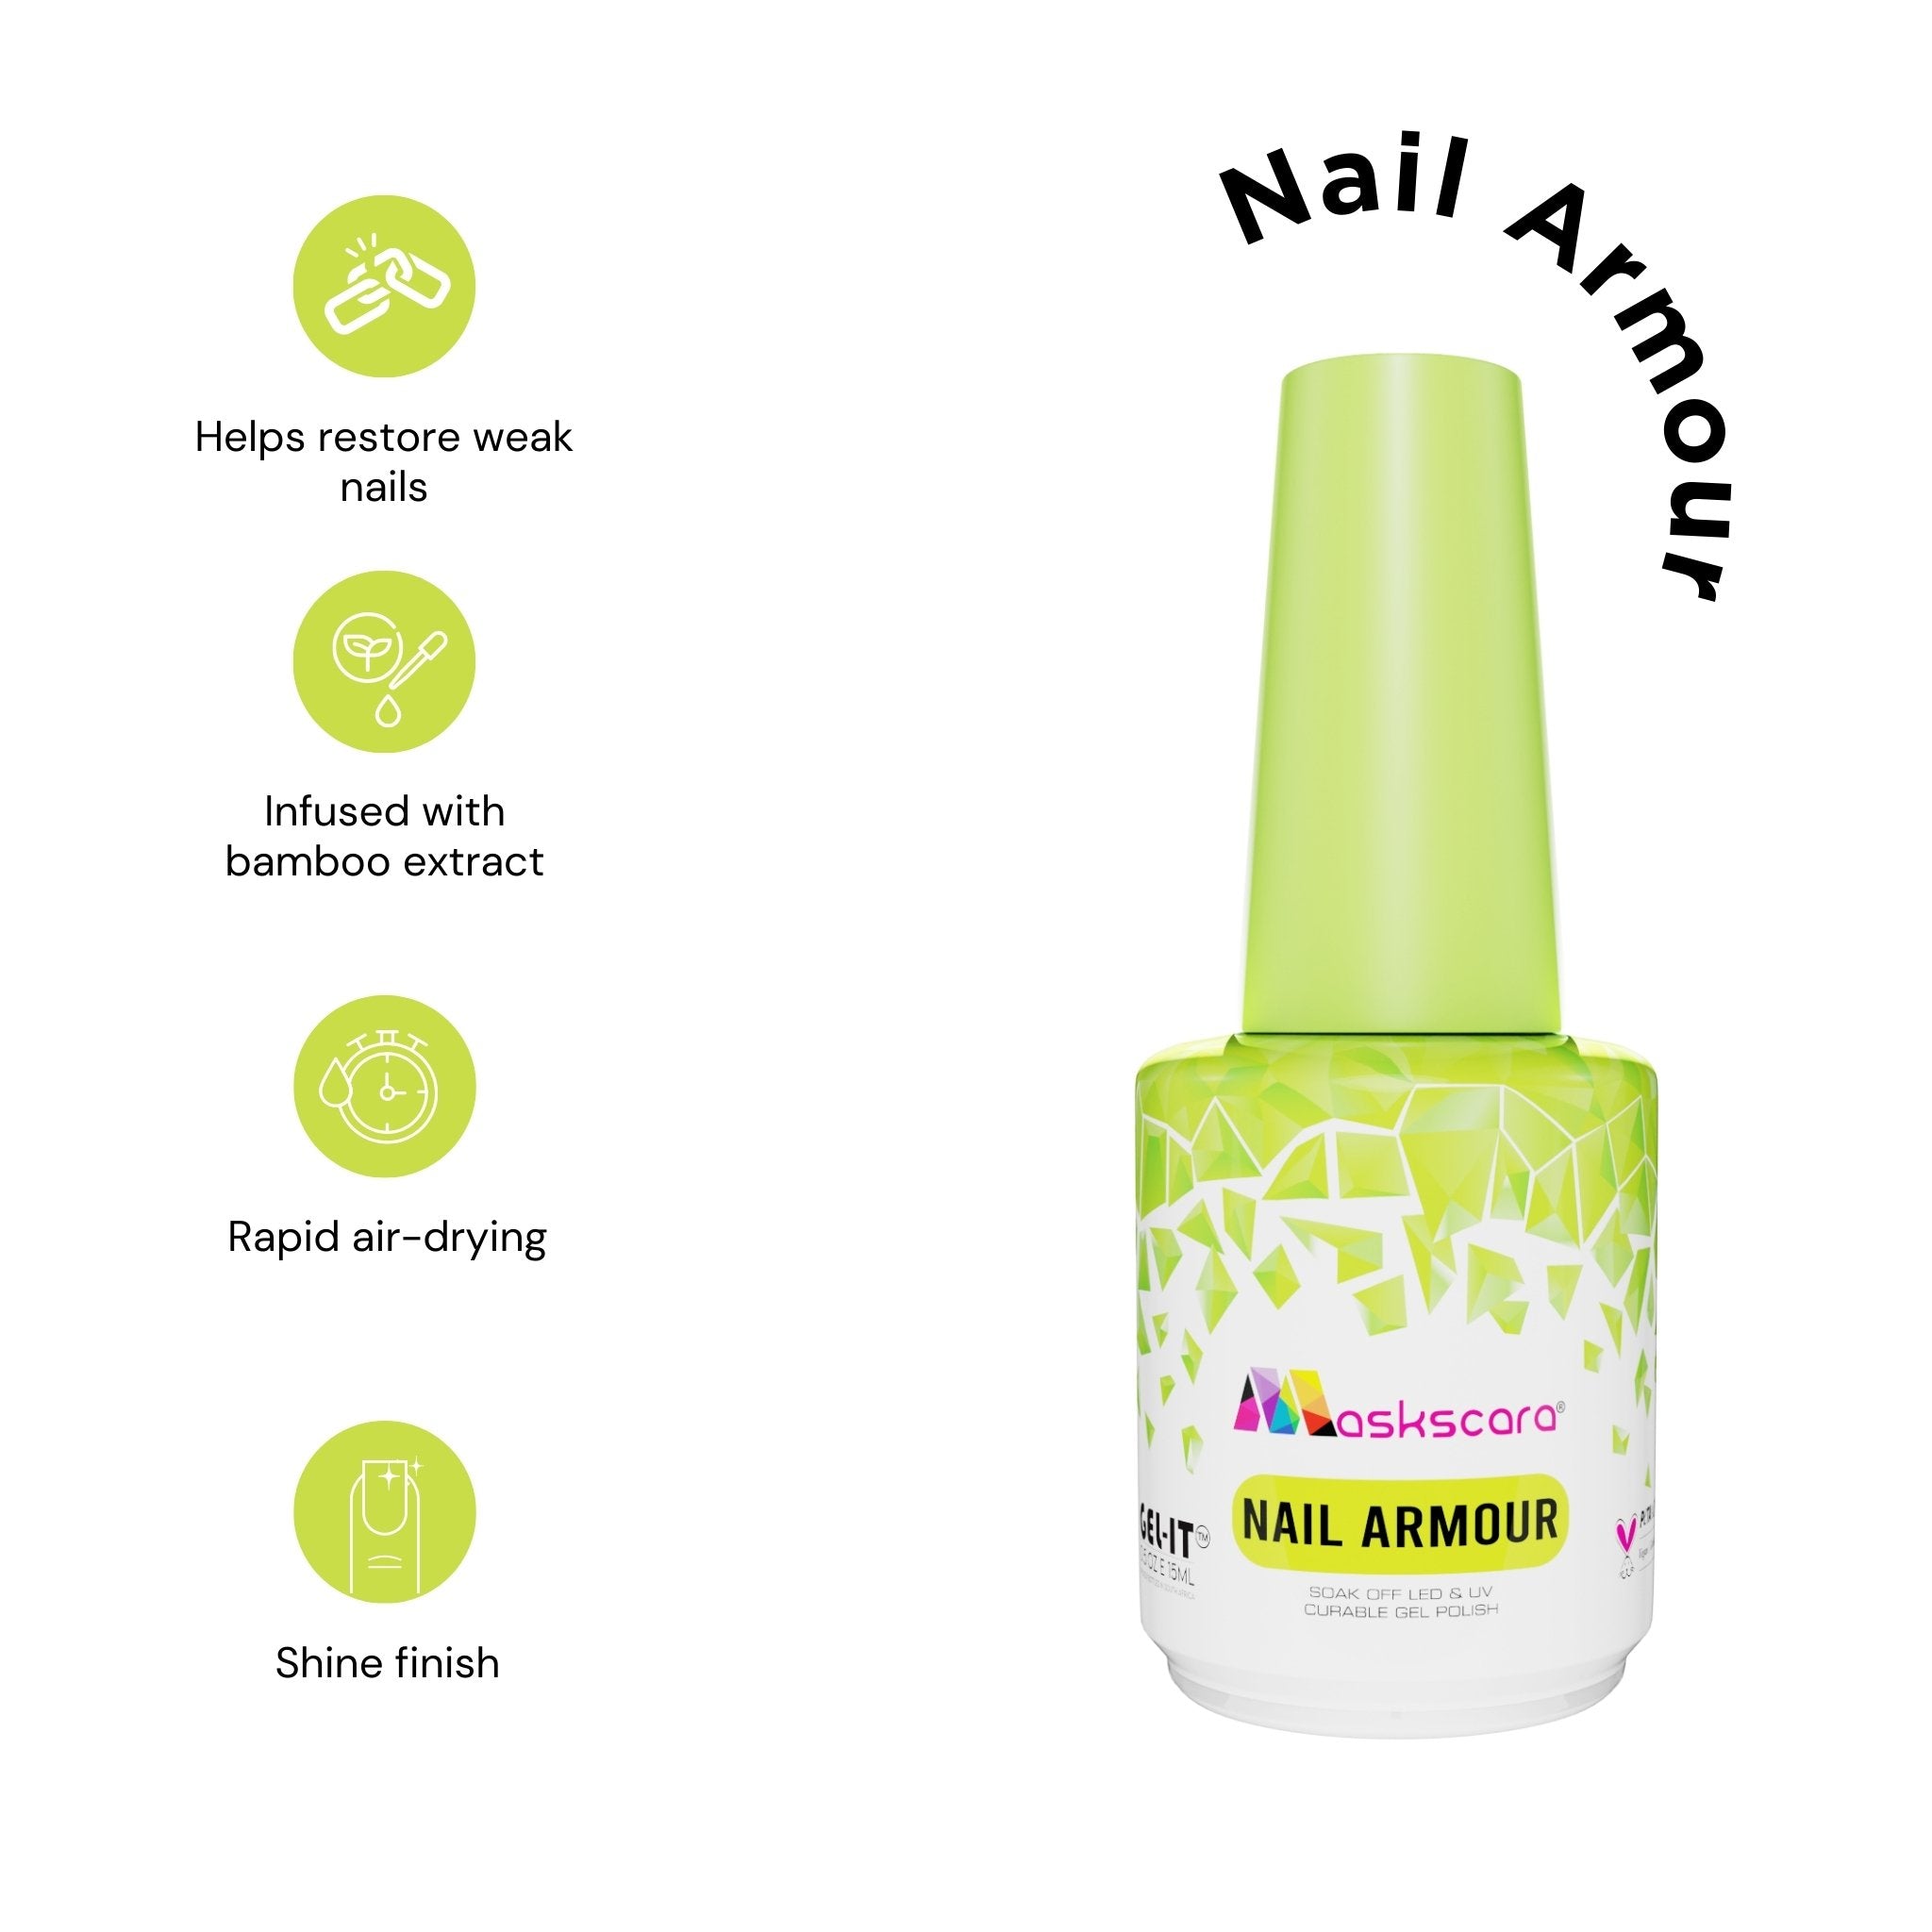 <img scr = “Maskscara Nail Armour.jpg” alt = “Natural nail strengthening treatment by the brand Maskscara ”>